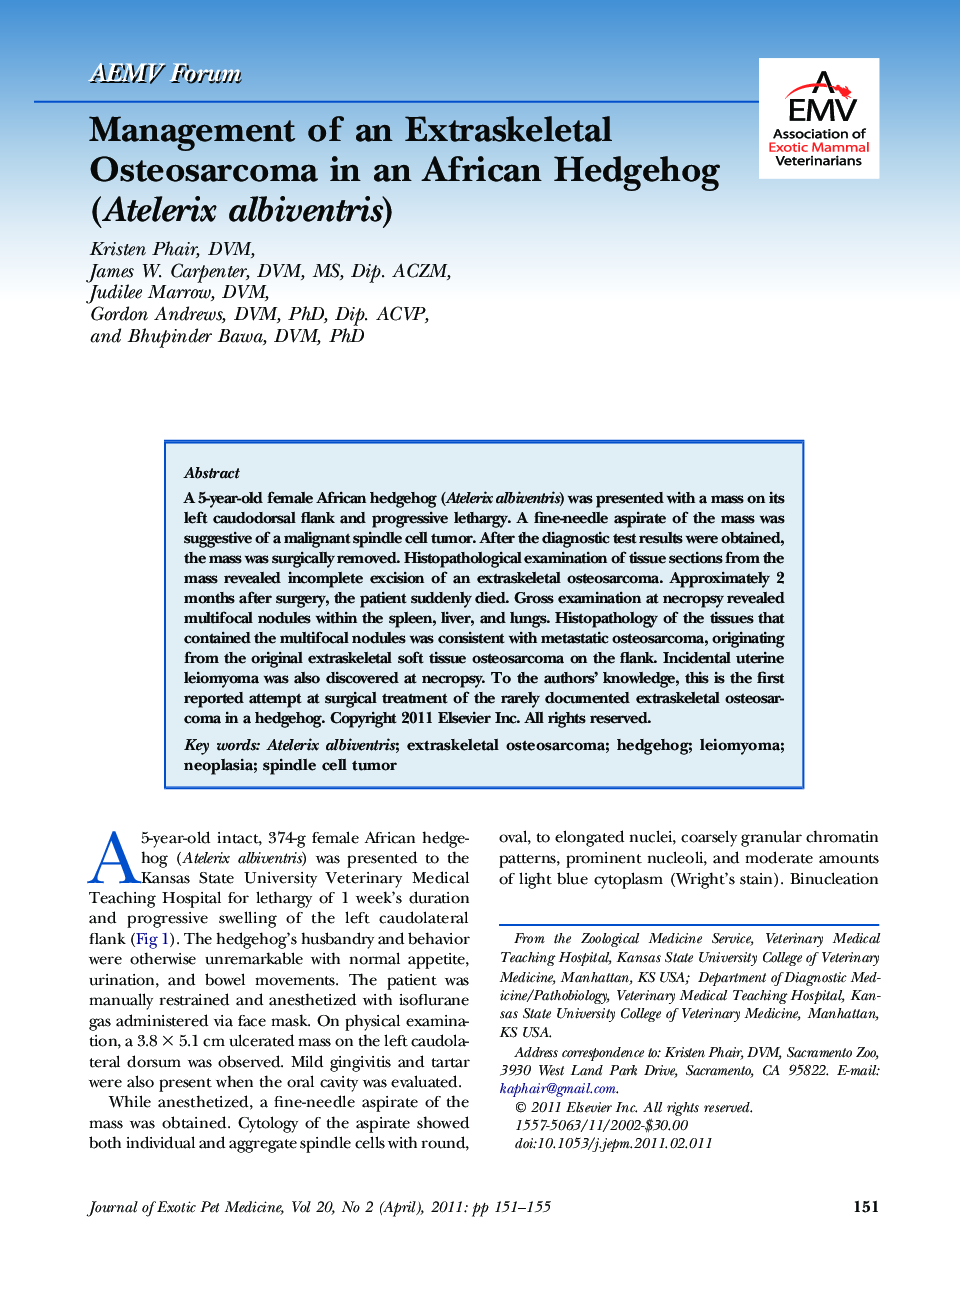 Management of an Extraskeletal Osteosarcoma in an African Hedgehog (Atelerix albiventris)